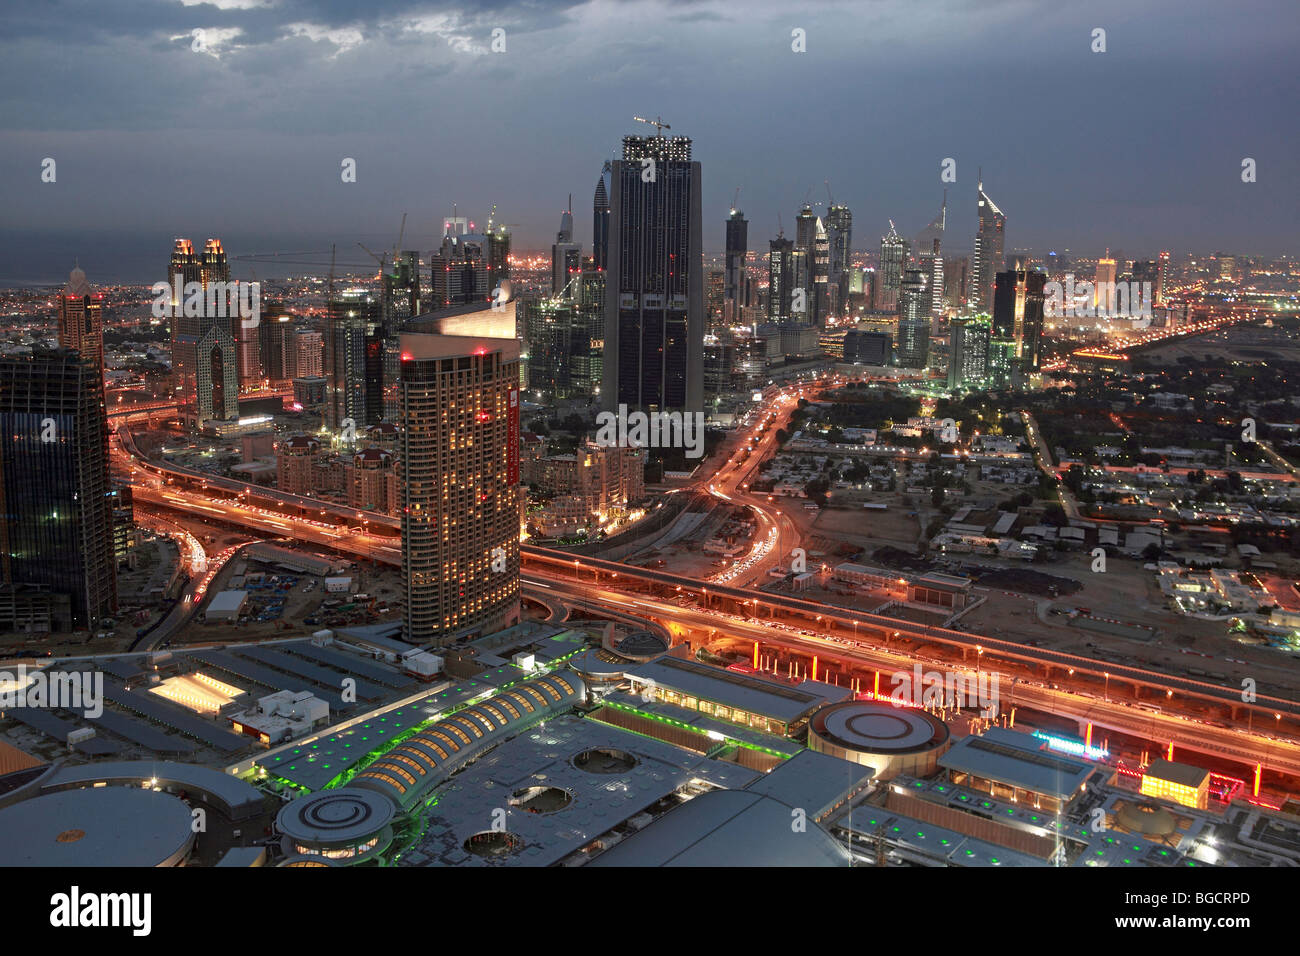 Dubai in the evening Stock Photo